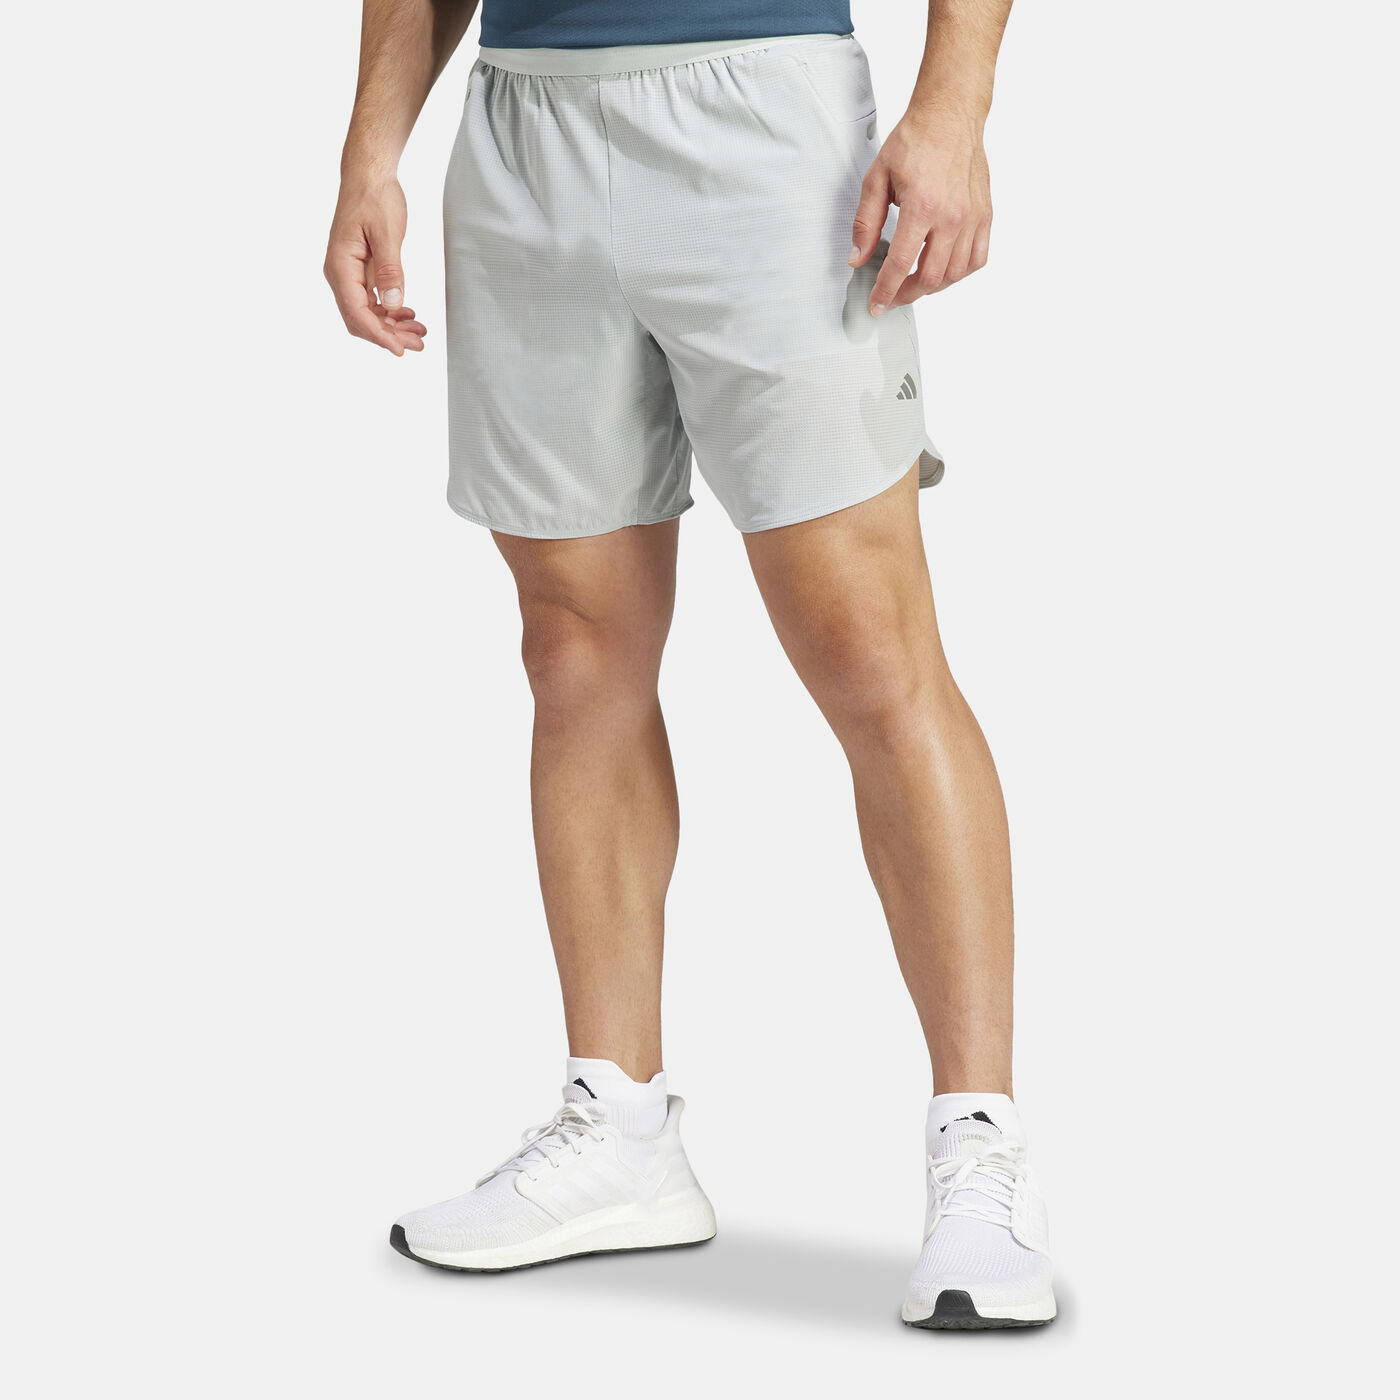 Men's Designed For Training HIIT Training Shorts